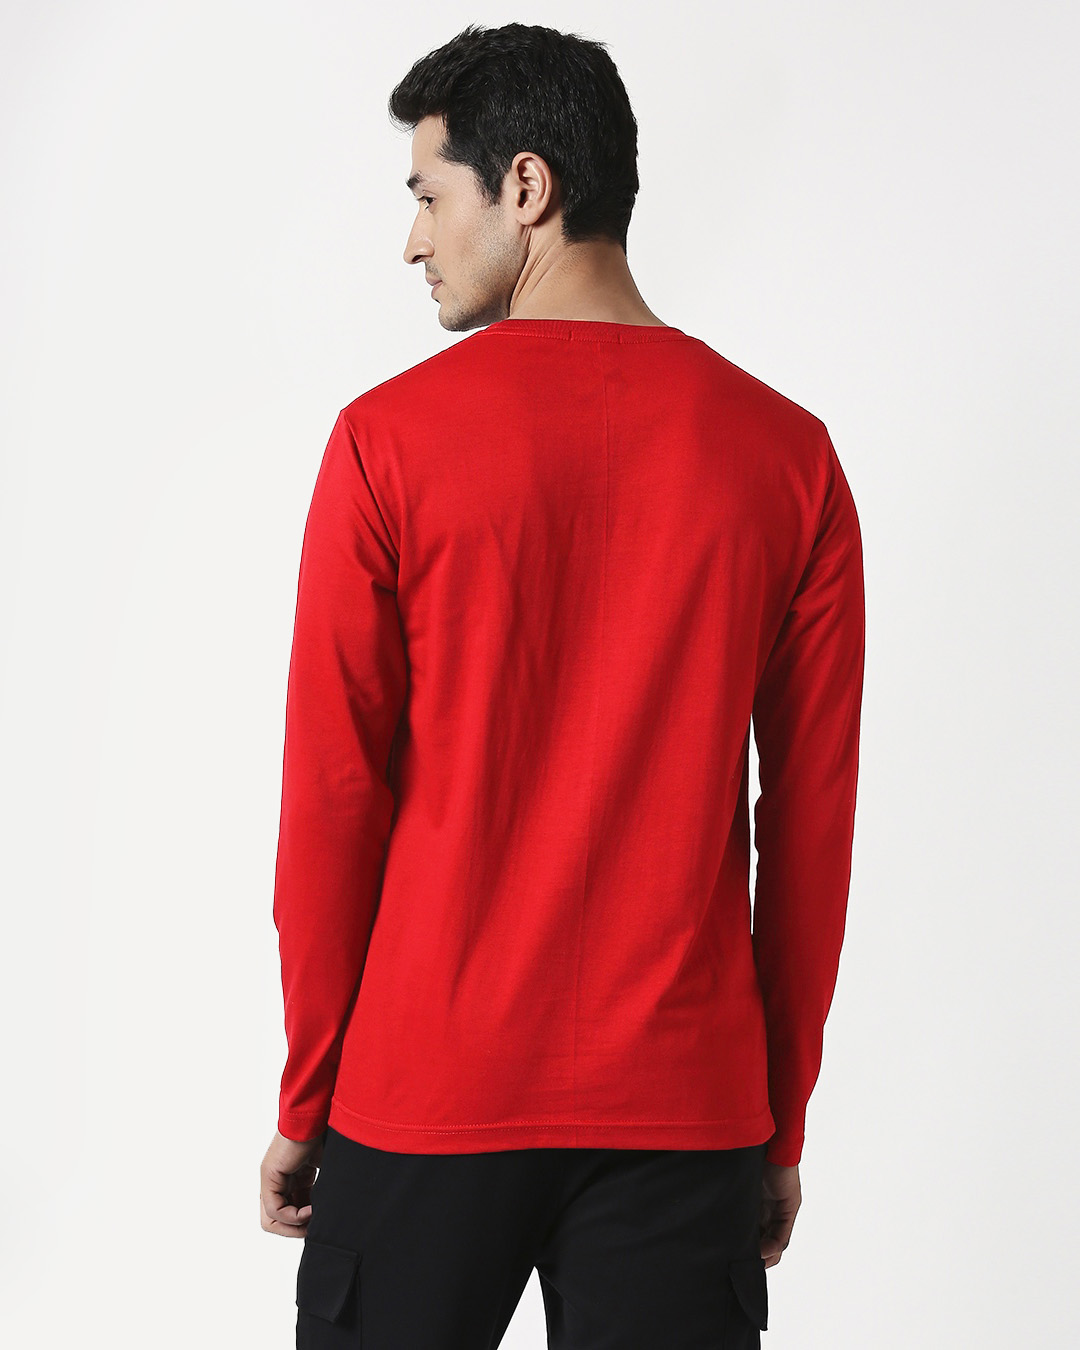 Shop Pocket Jerry Full Sleeve T-Shirt (TJL)-Back